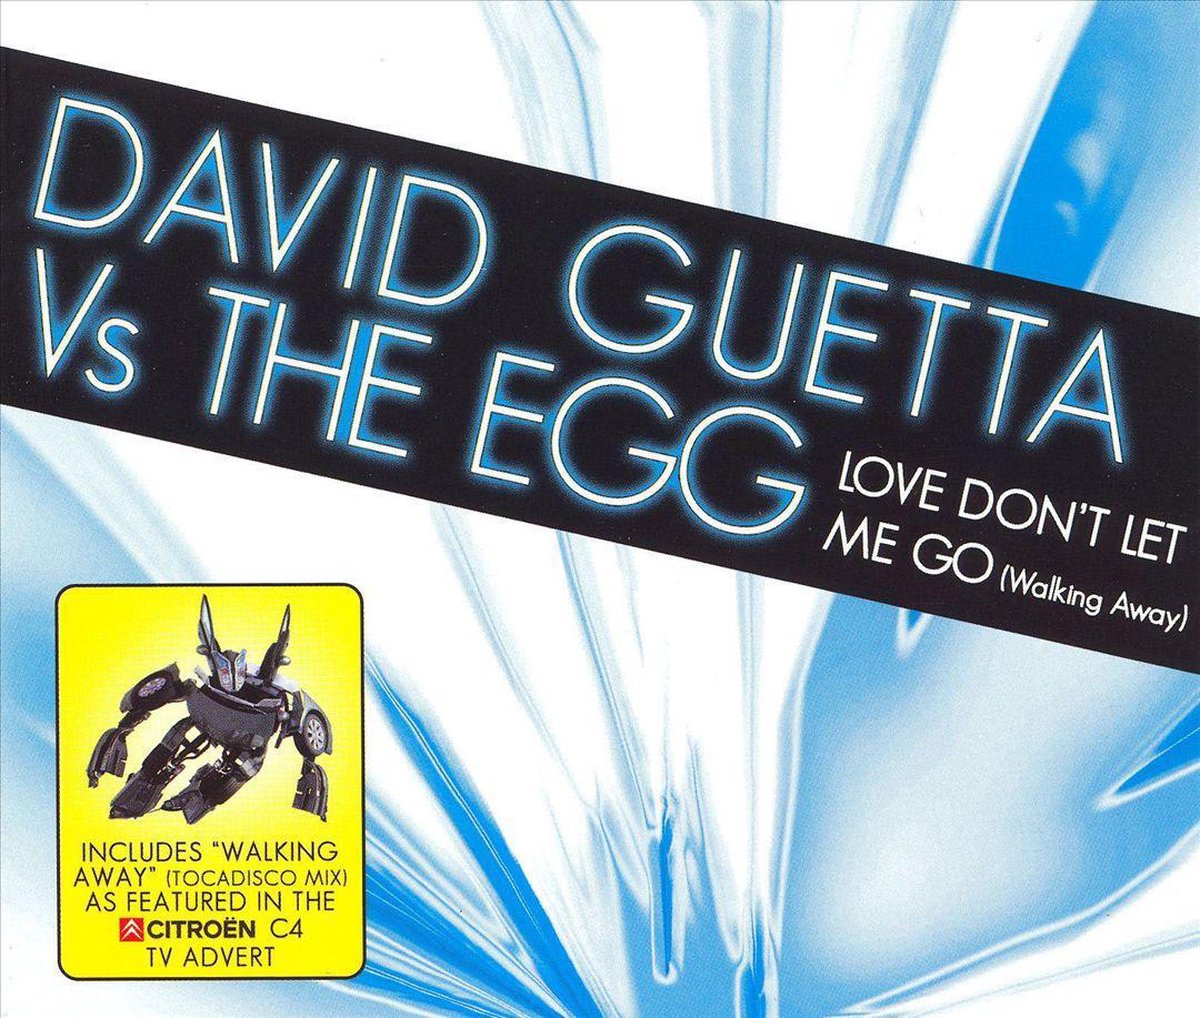 Love DonT Let Me Go (Walking Away) - David Vs The Egg Guetta